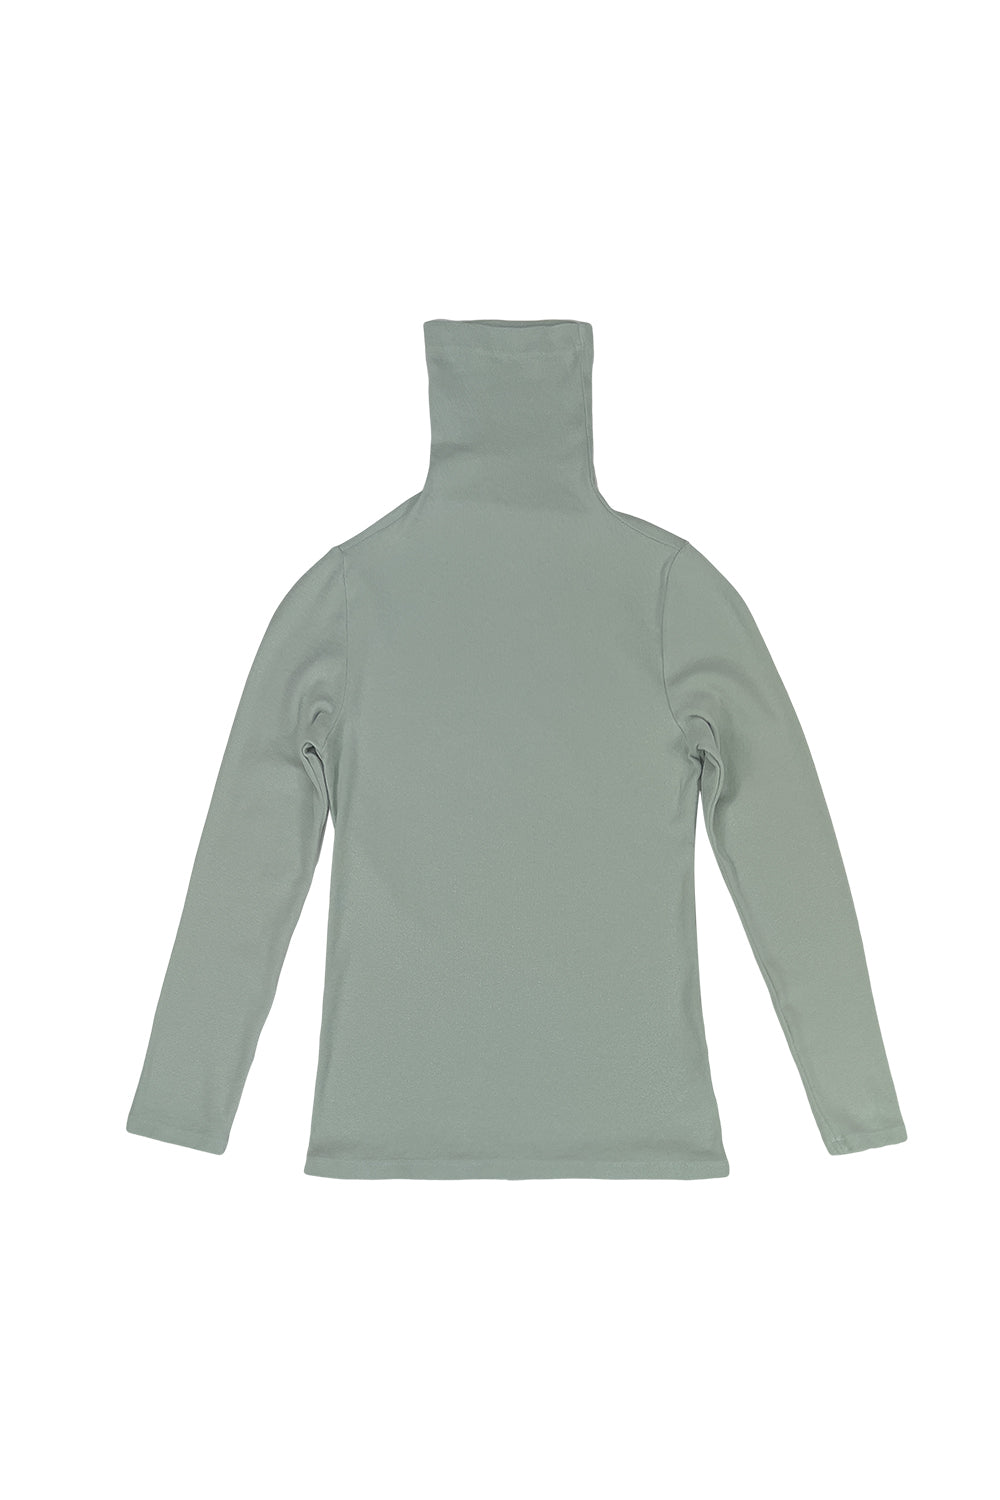 Whidbey Turtleneck | Jungmaven Hemp Clothing & Accessories / Color:Seafoam Green